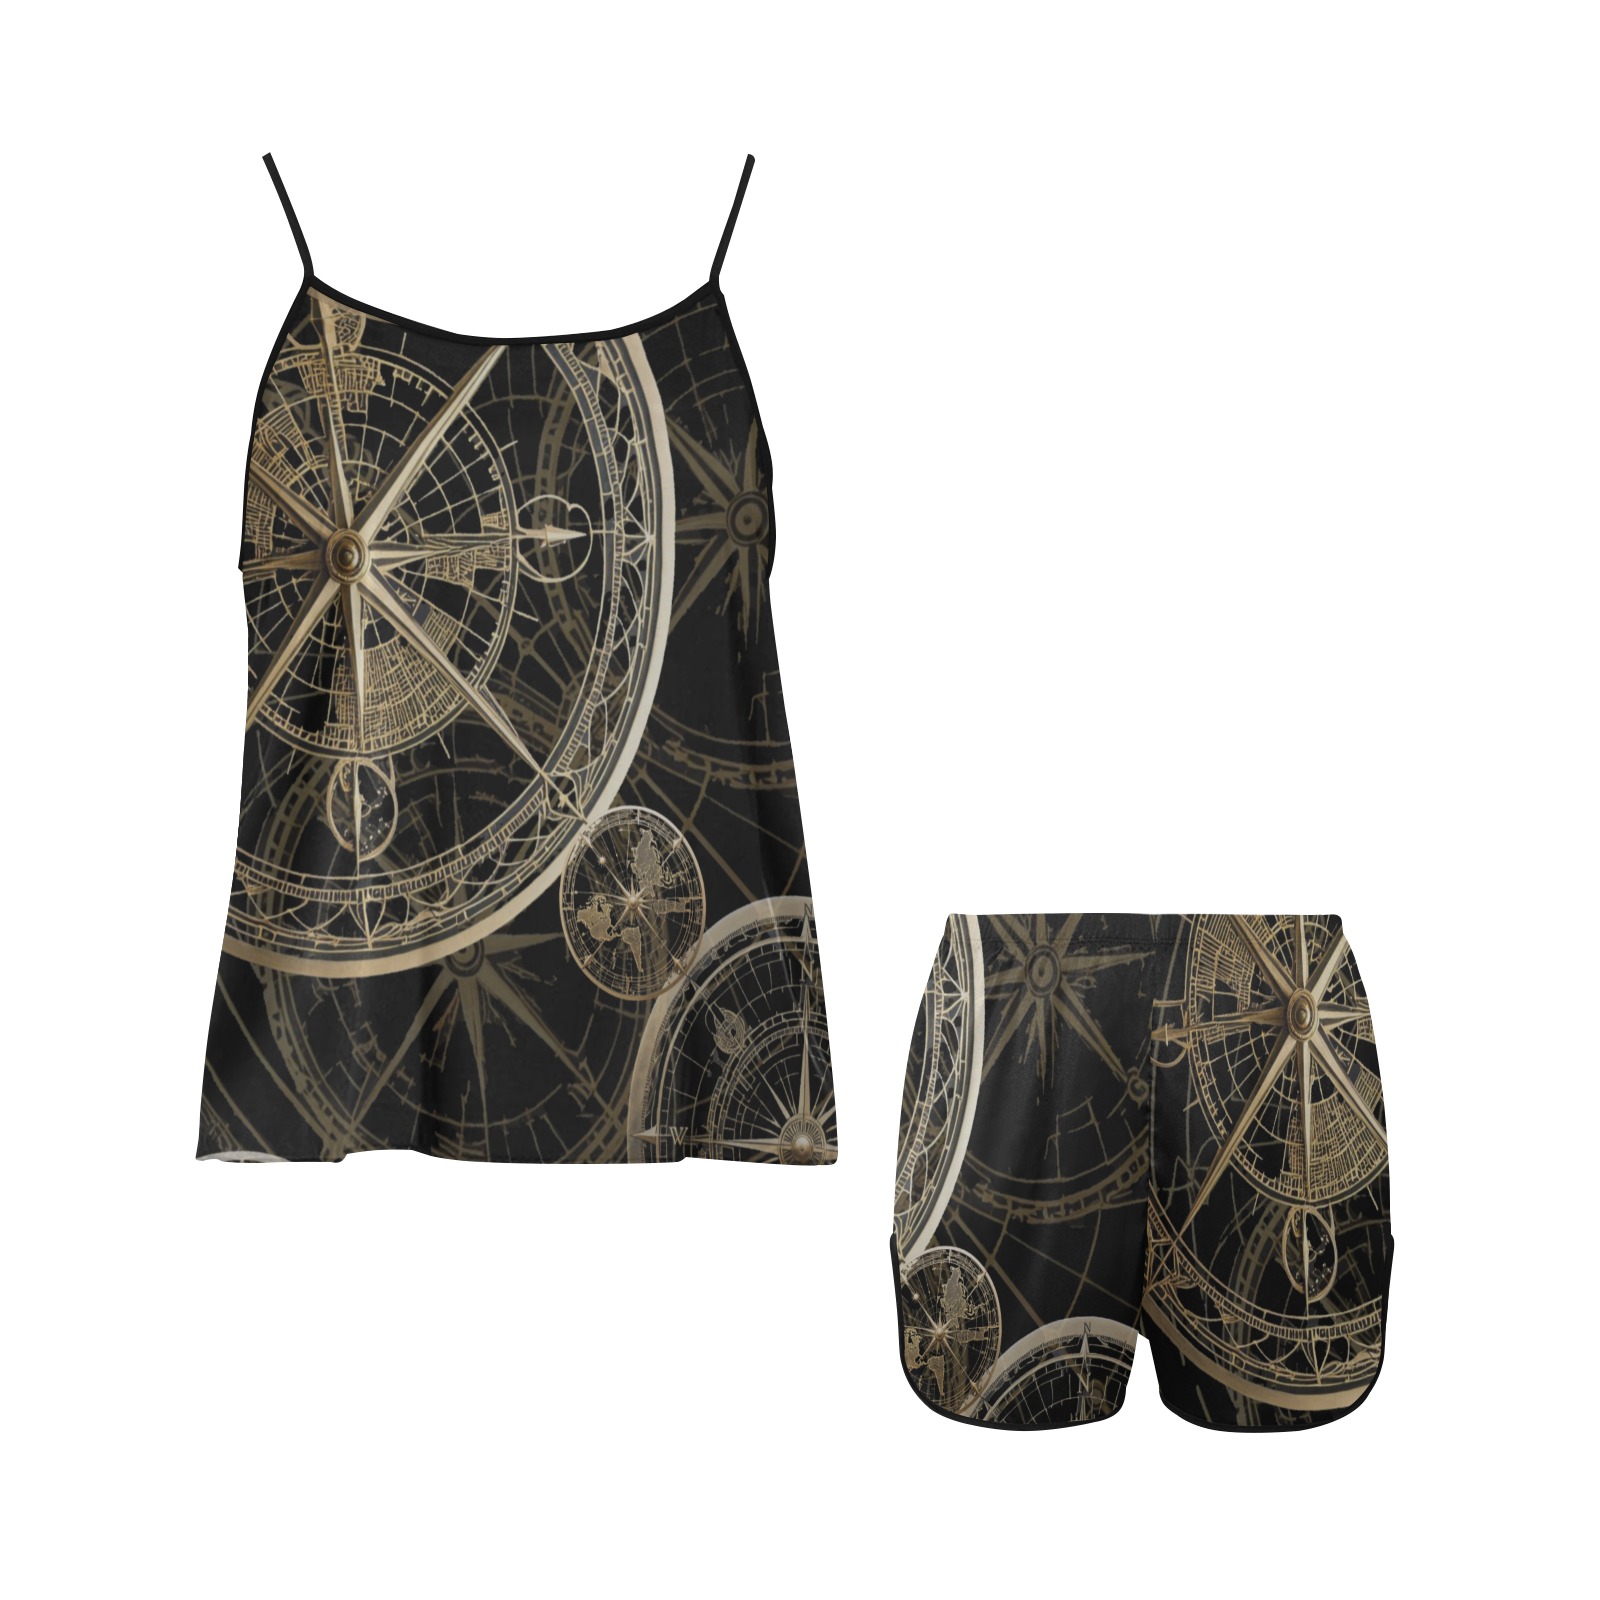 Compass short sleeve PJ set Women's Spaghetti Strap Short Pajama Set